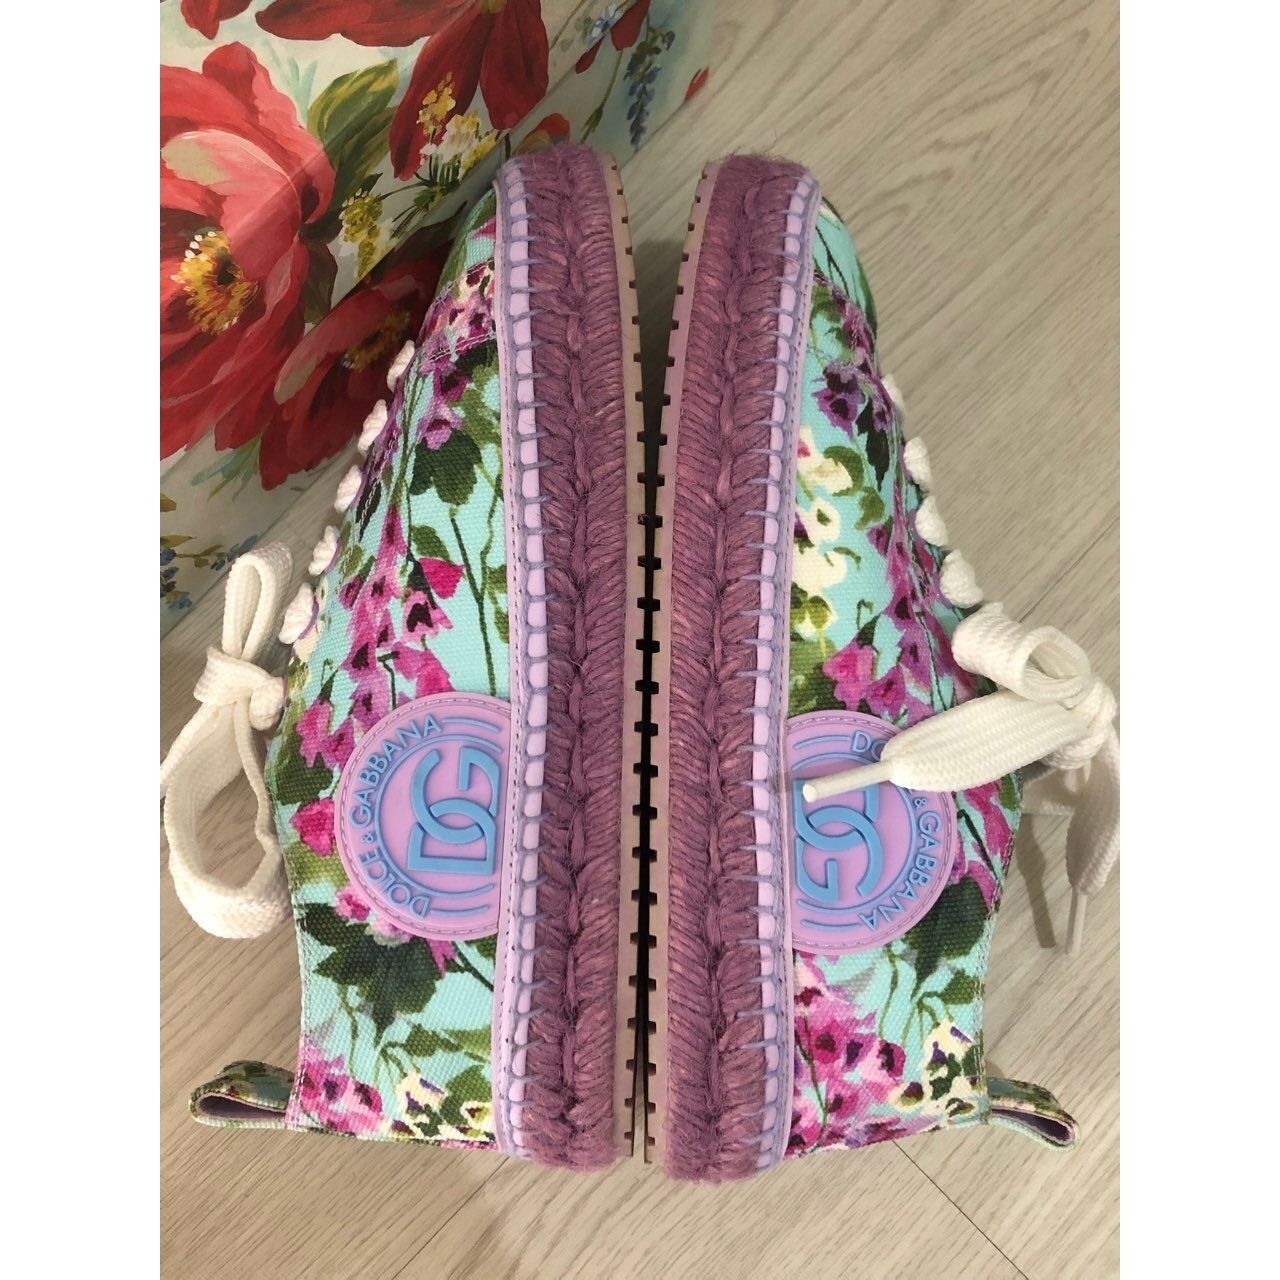 Dolce & Gabbana Multicolour Floral Sneakers